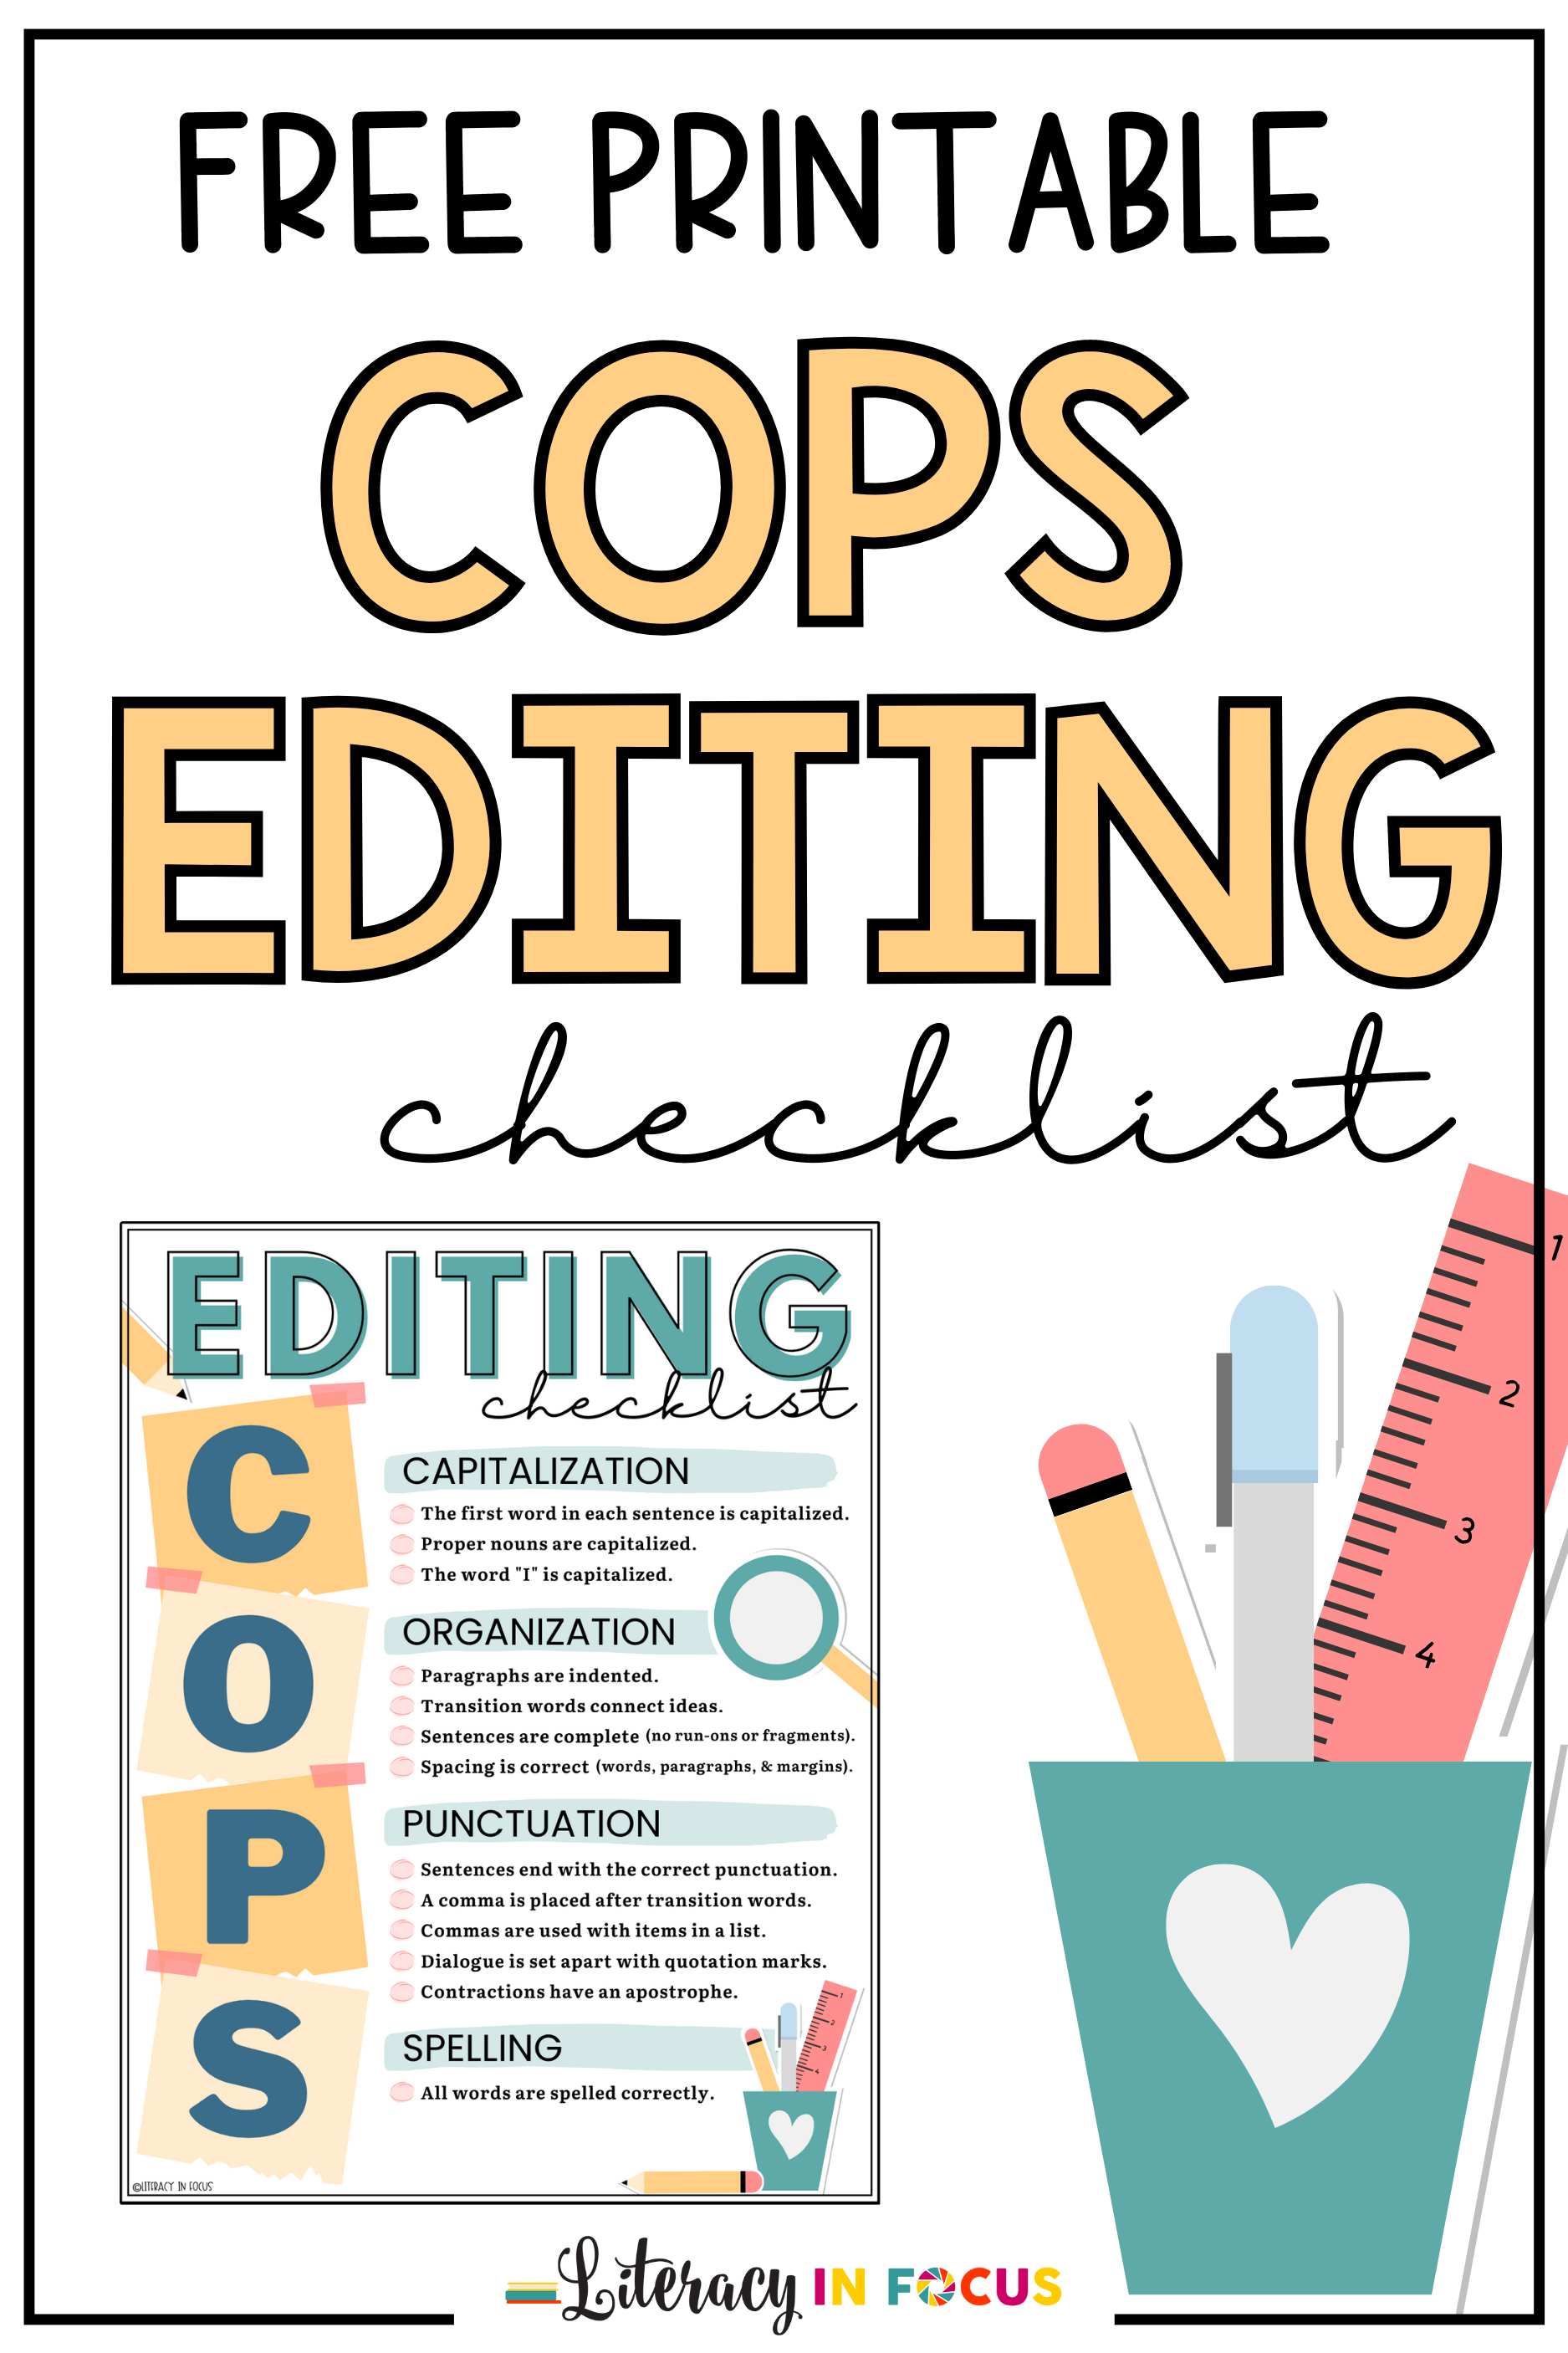 Free Printable PDF | COPS Editing Checklist